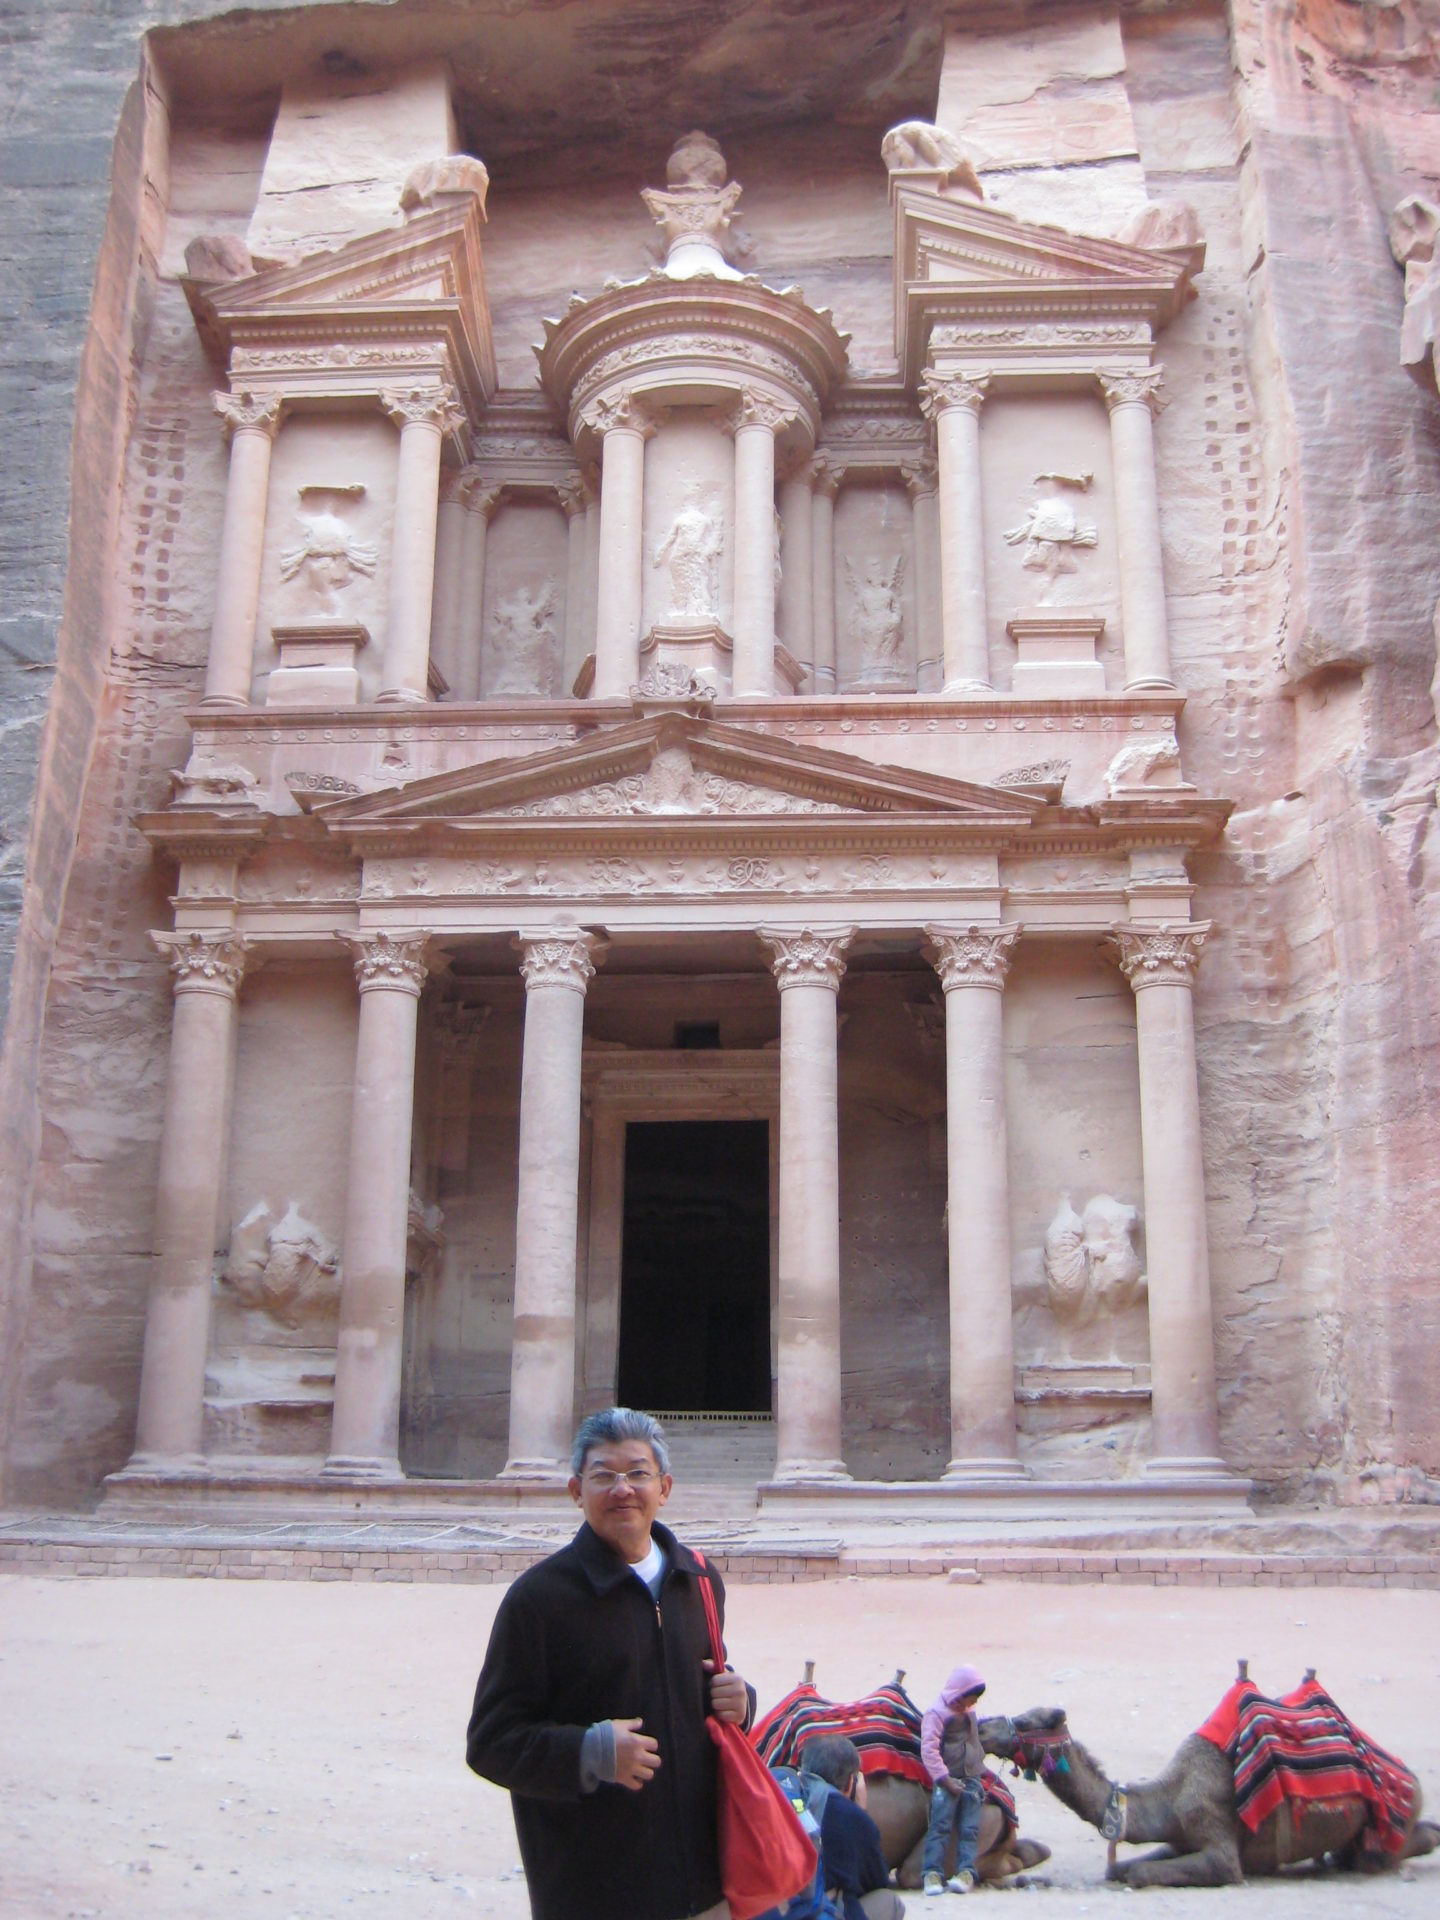 Petra – the reason I’ve always wanted to visit Jordan